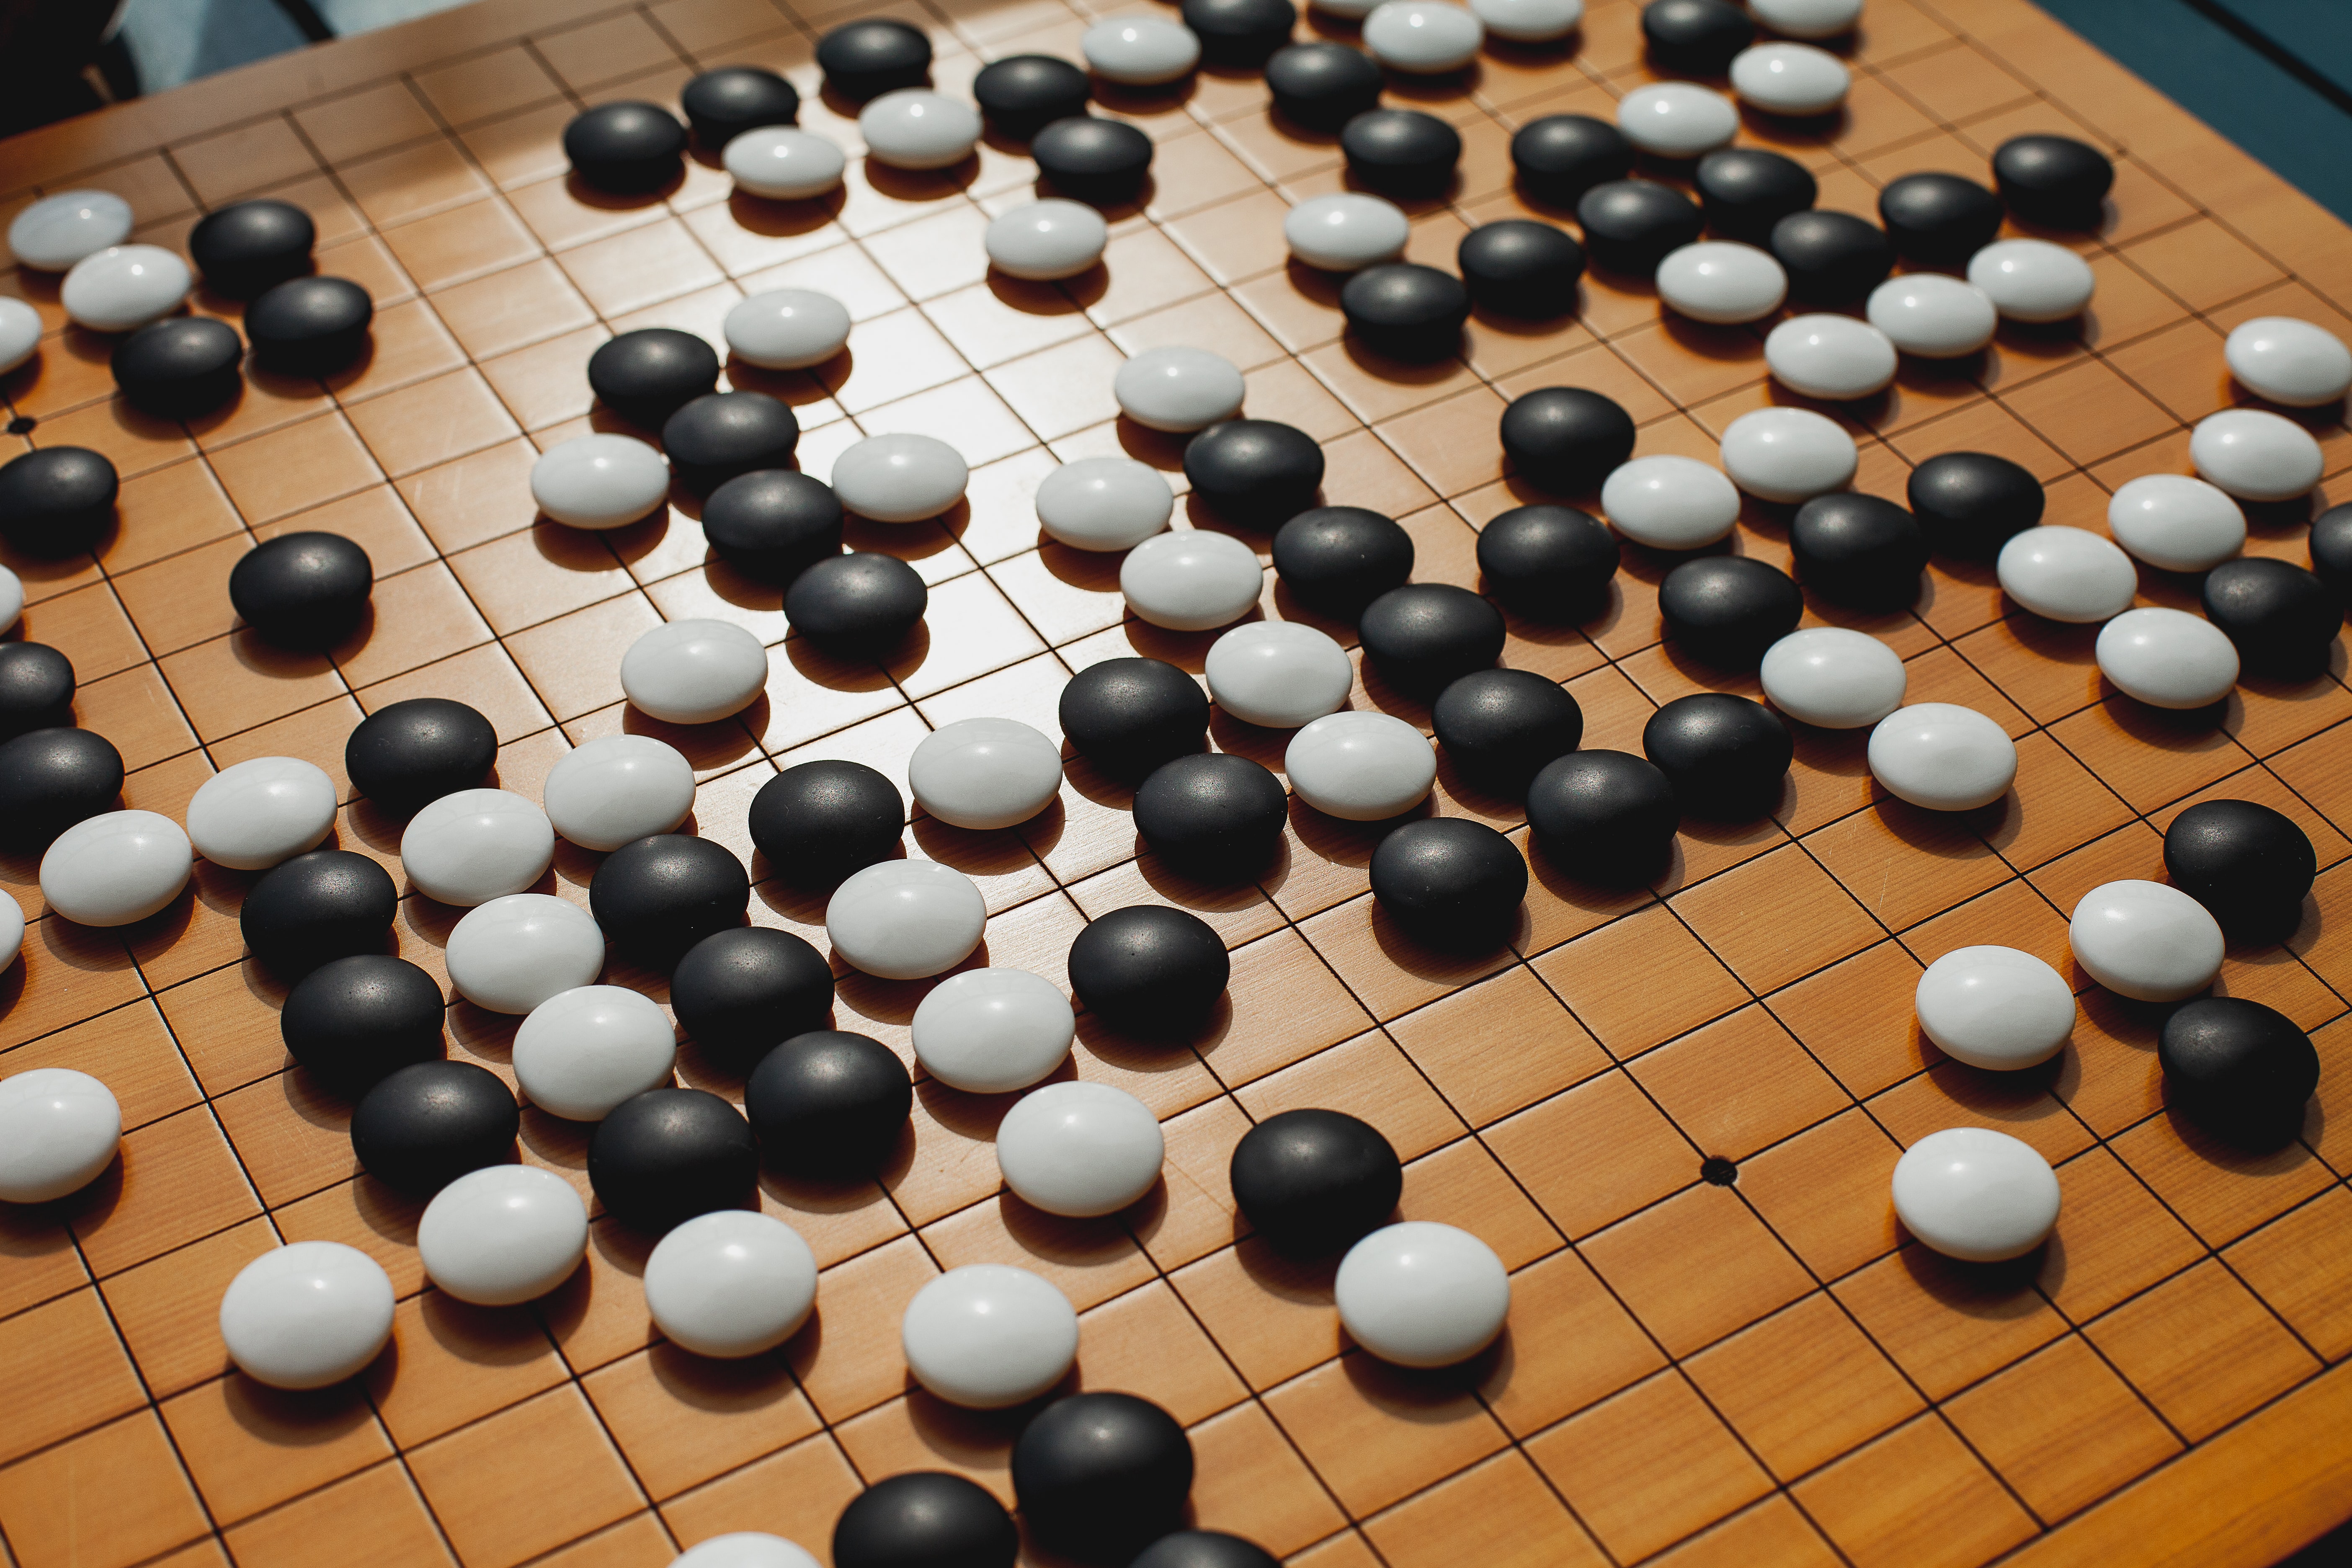 AlphaGo Zero Explained